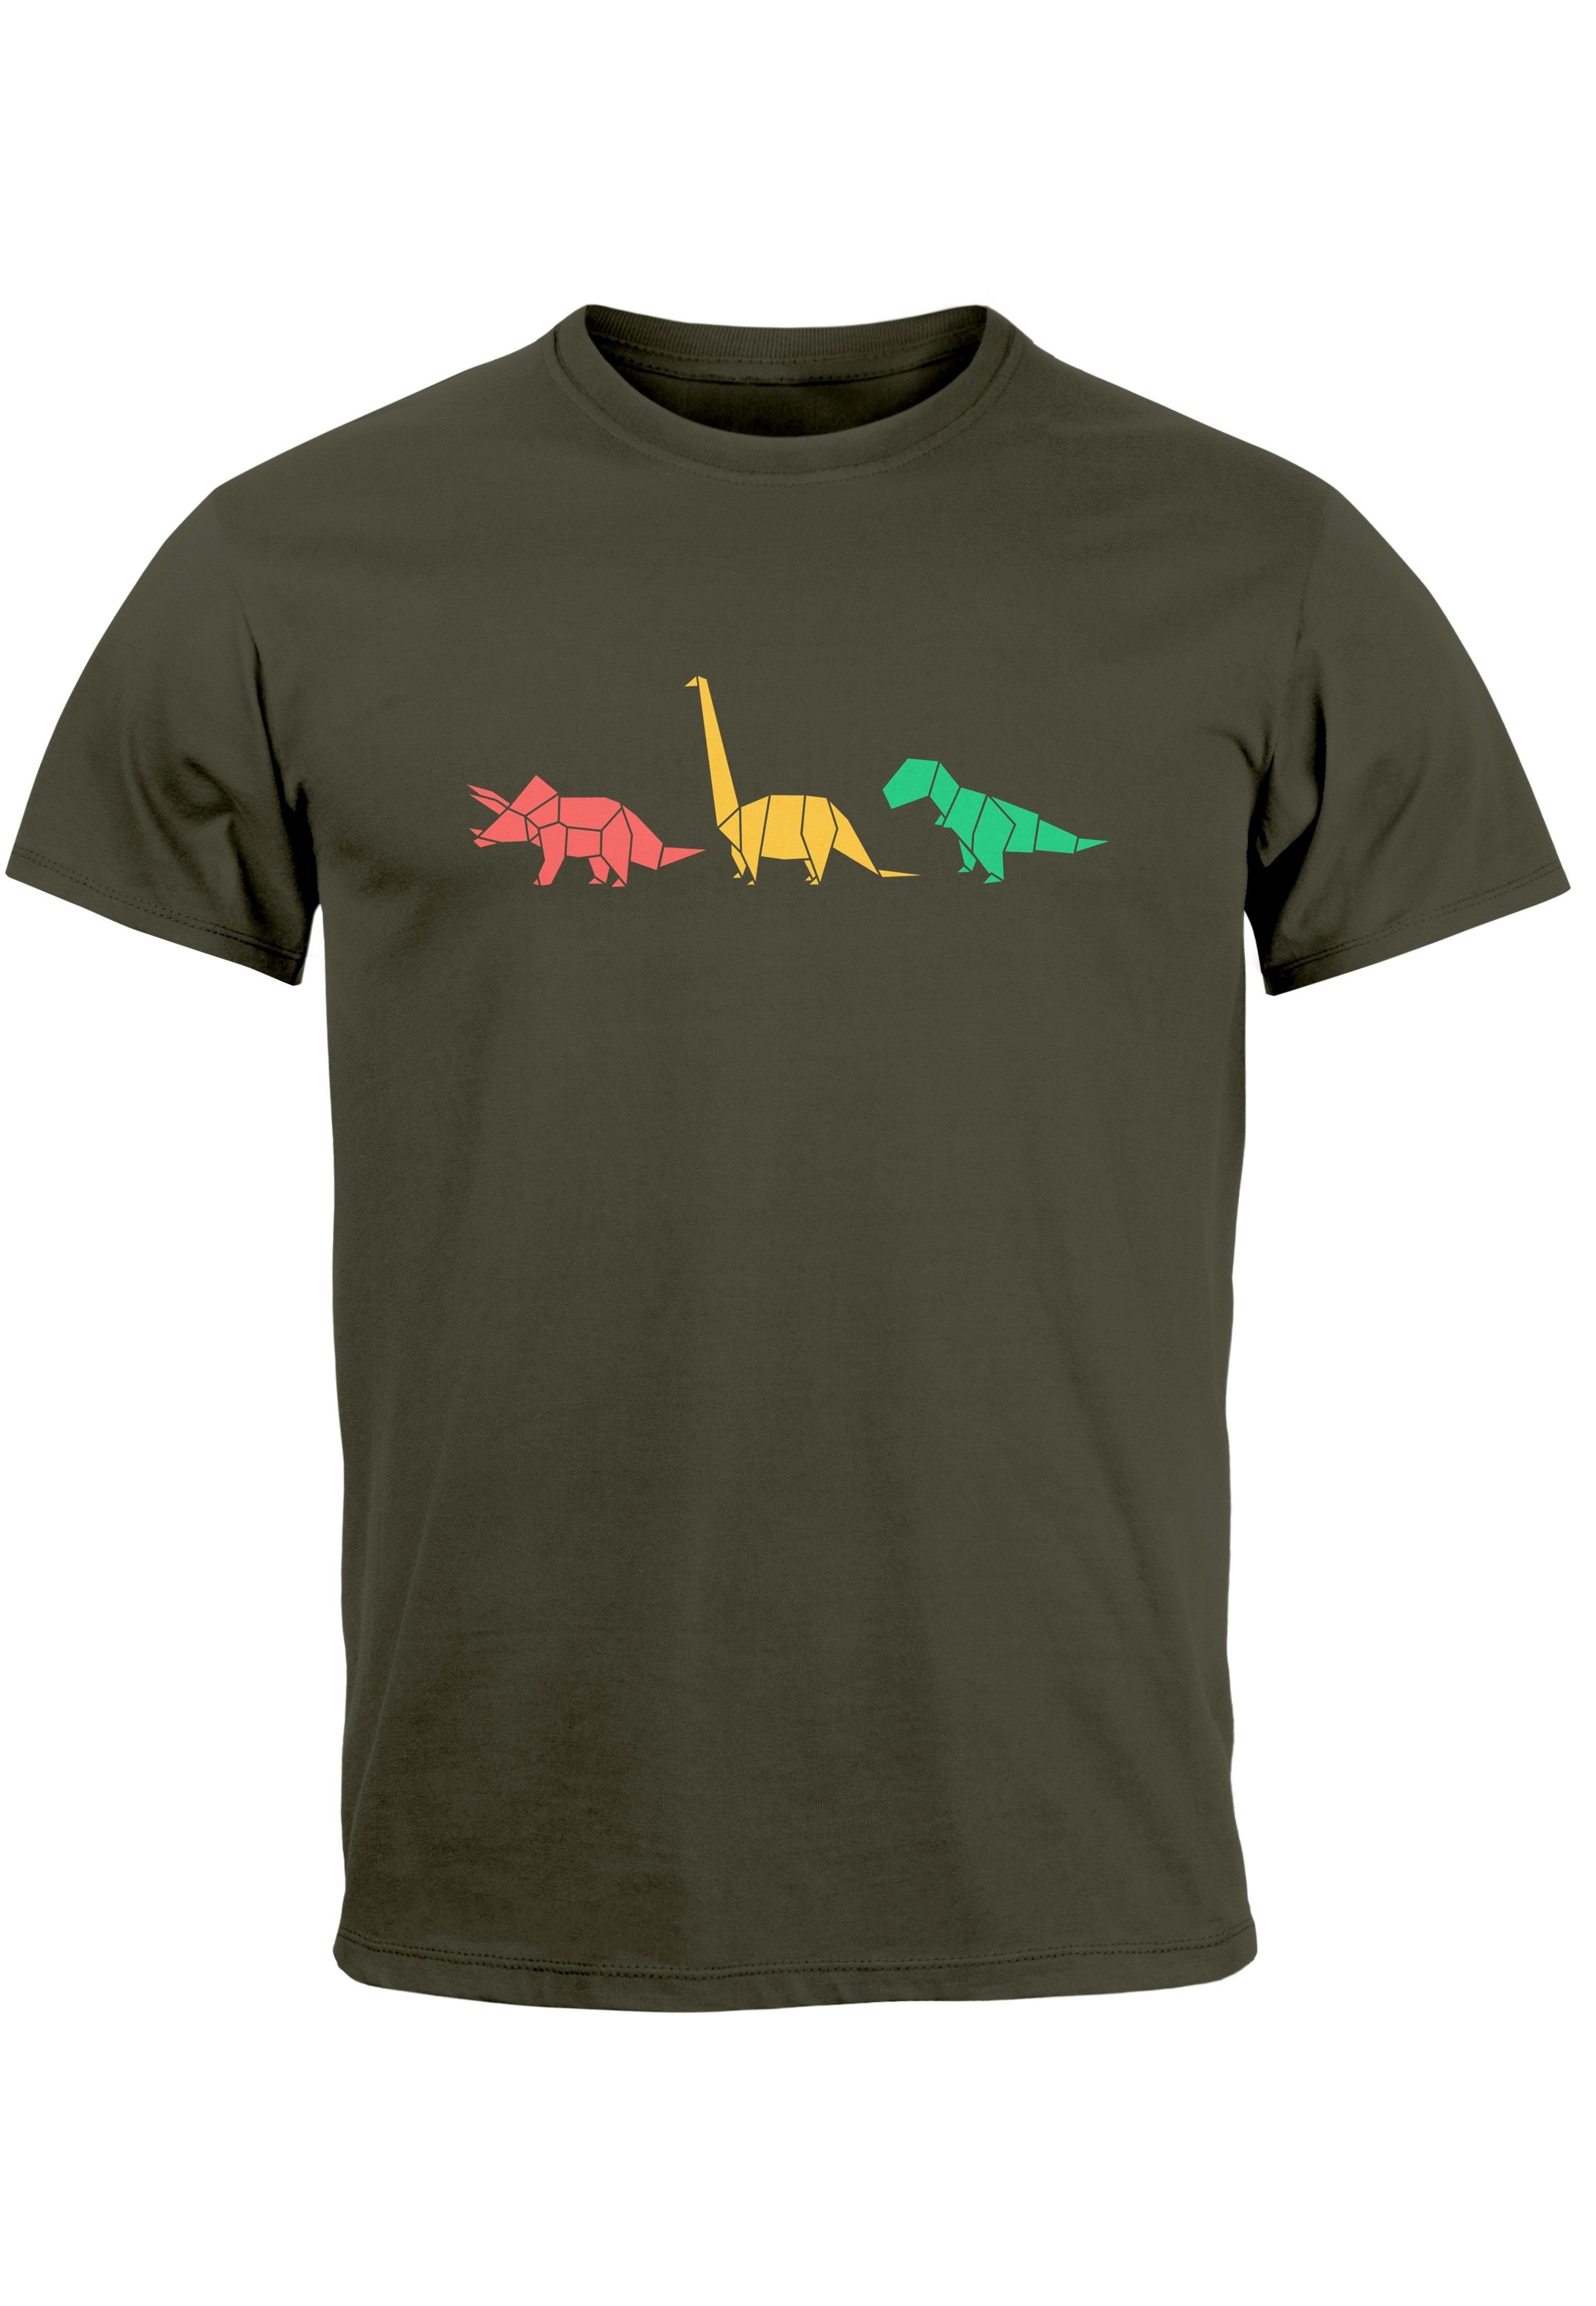 Print-Shirt Neverless T-Shirt Aufdruck mit Fash Tiere Herren Print Dinosaurier army Polygon Print Geometric